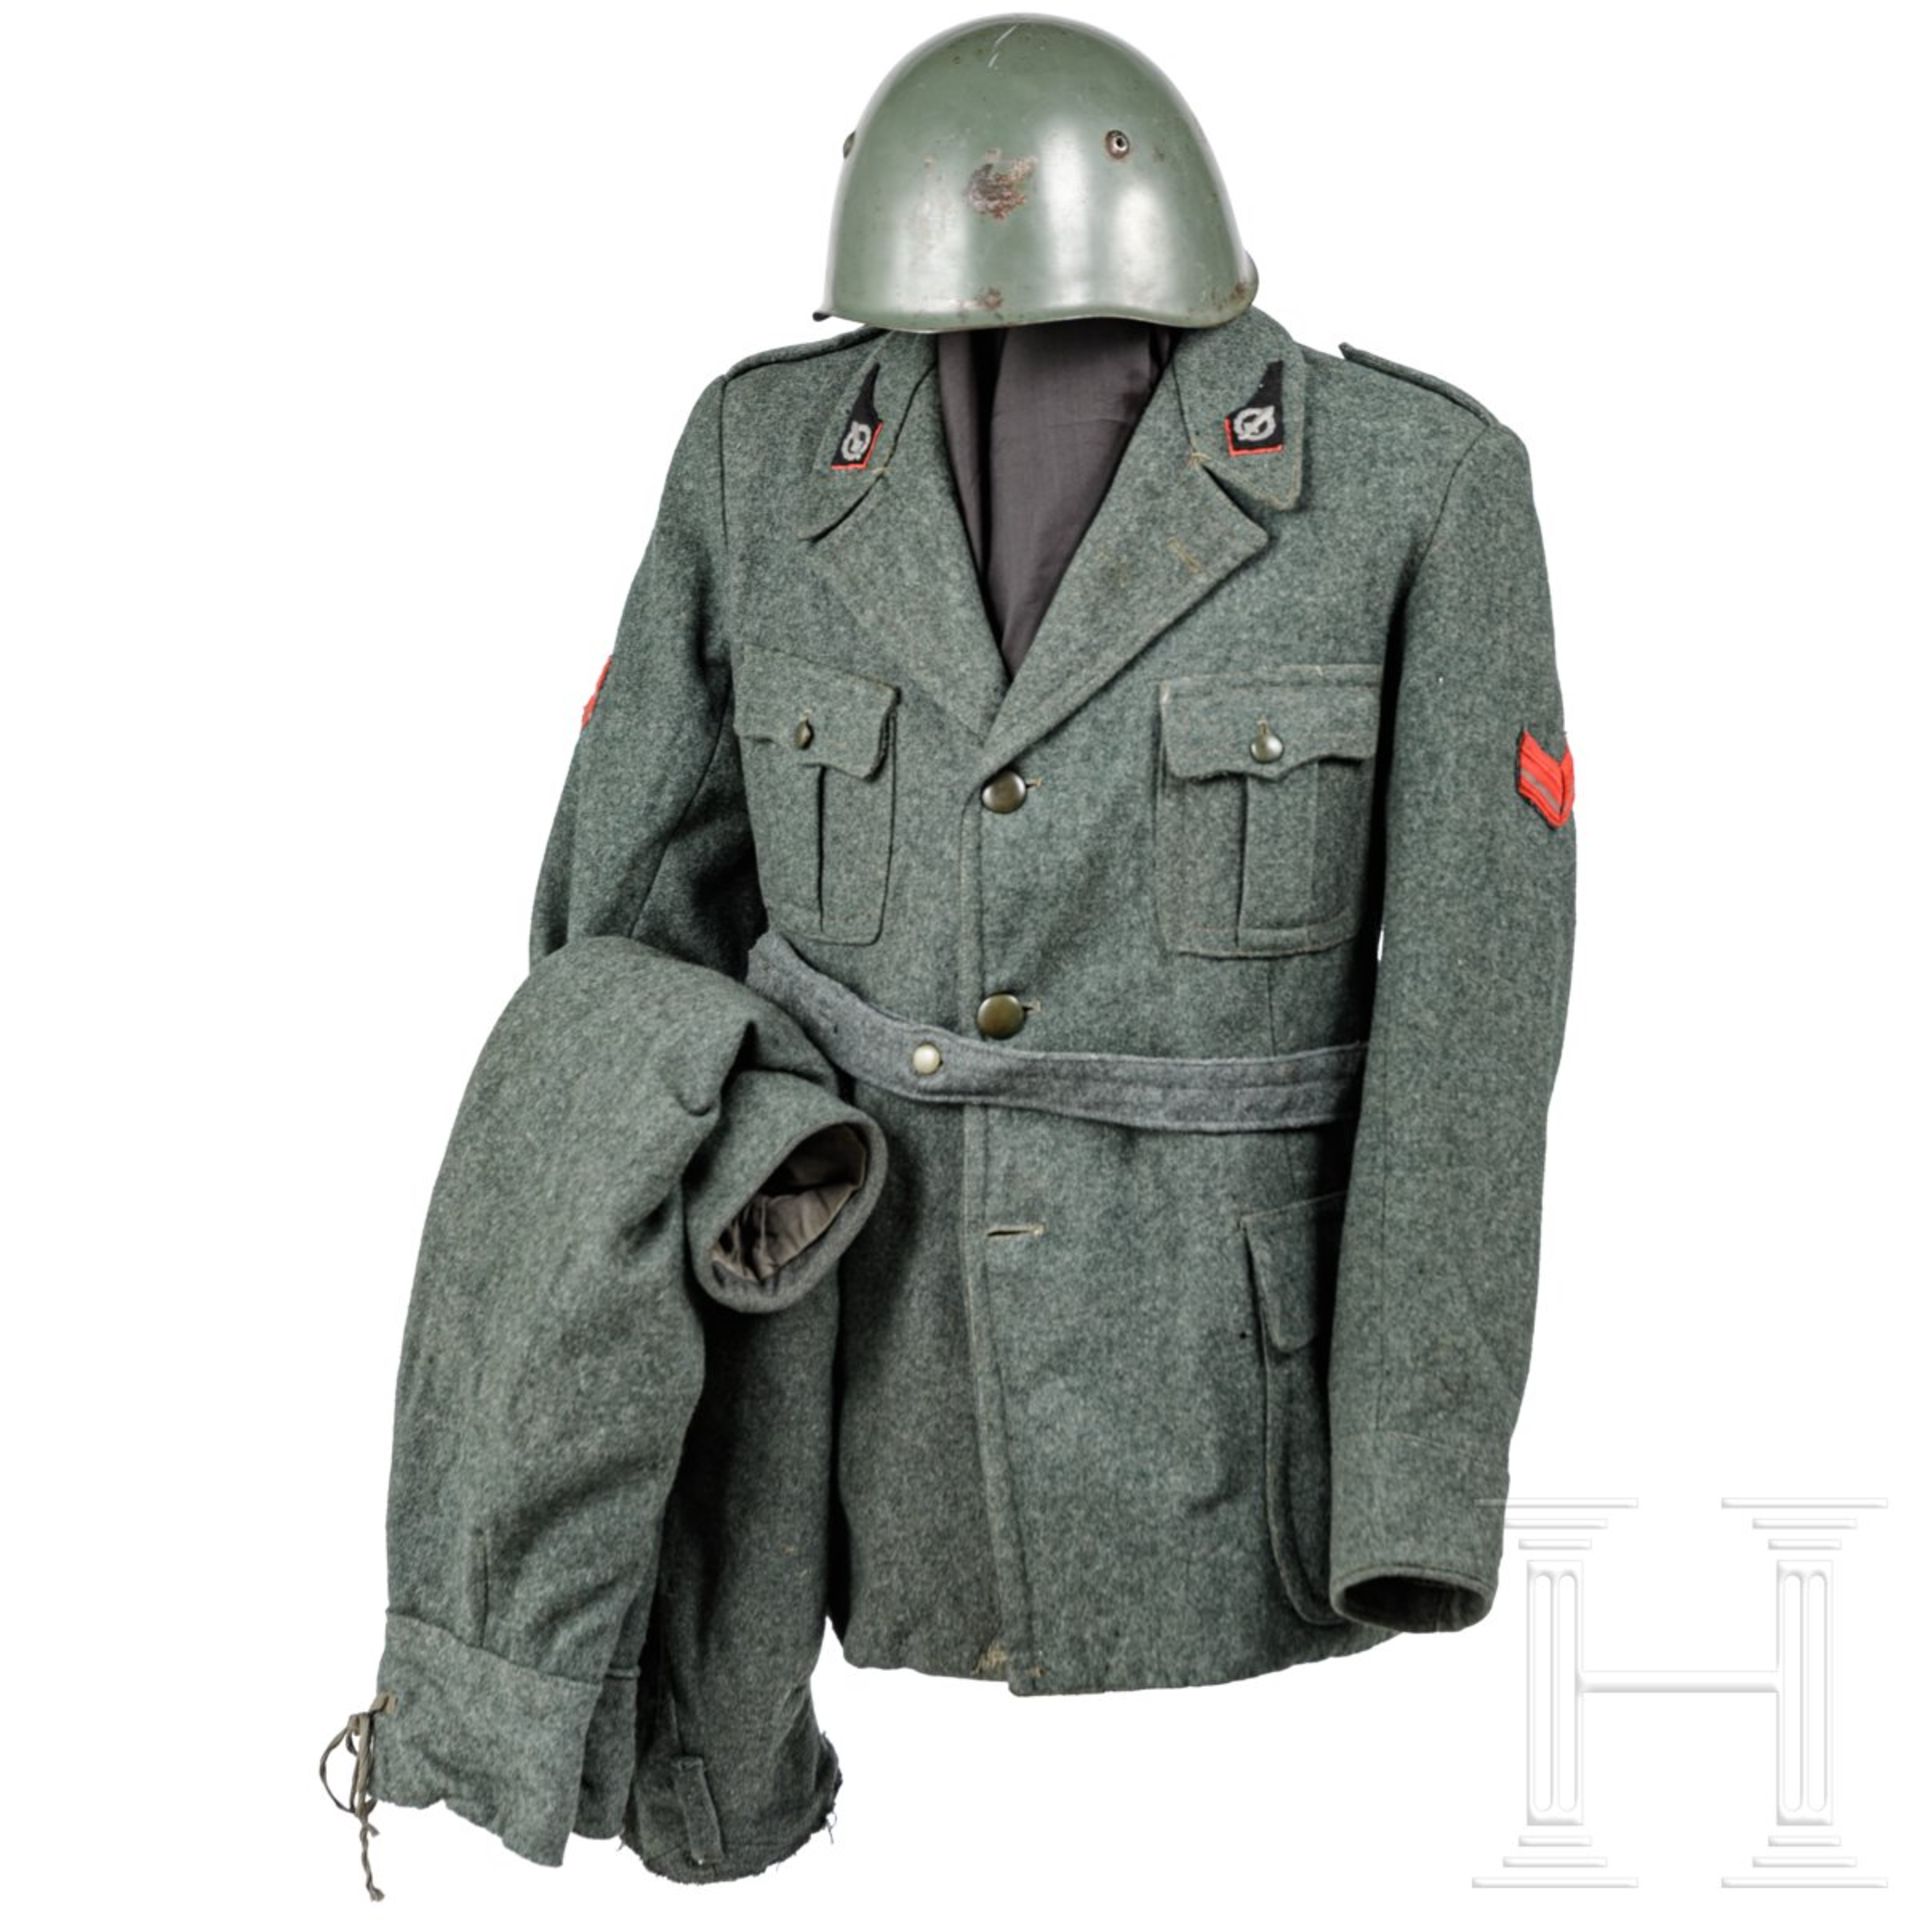 Uniformensemble eines Soldaten der Repubblica Sociale Italiana (RSI), 1943-45